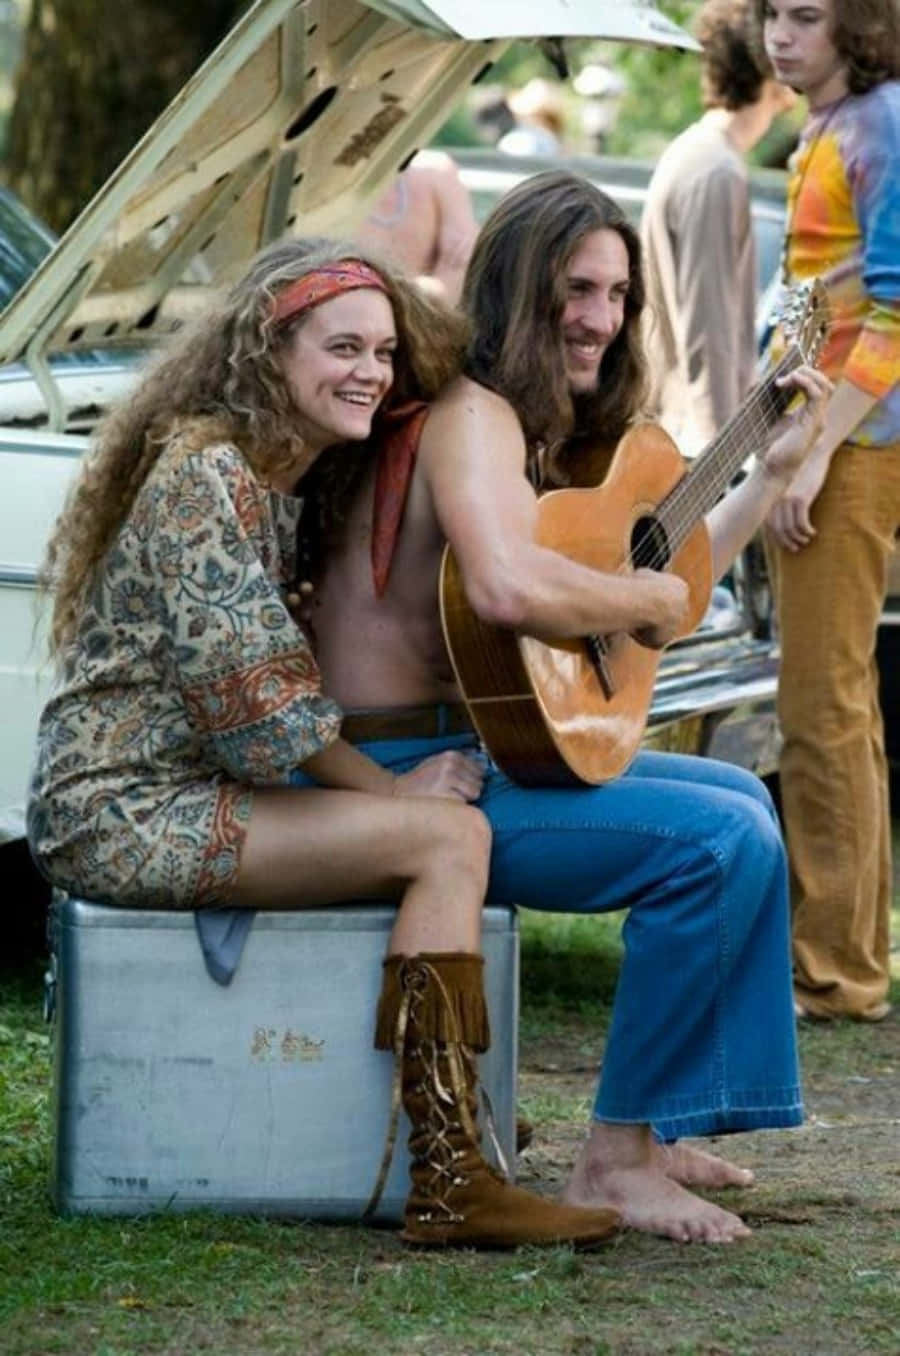 Caption: Vintage Hippie Vibes